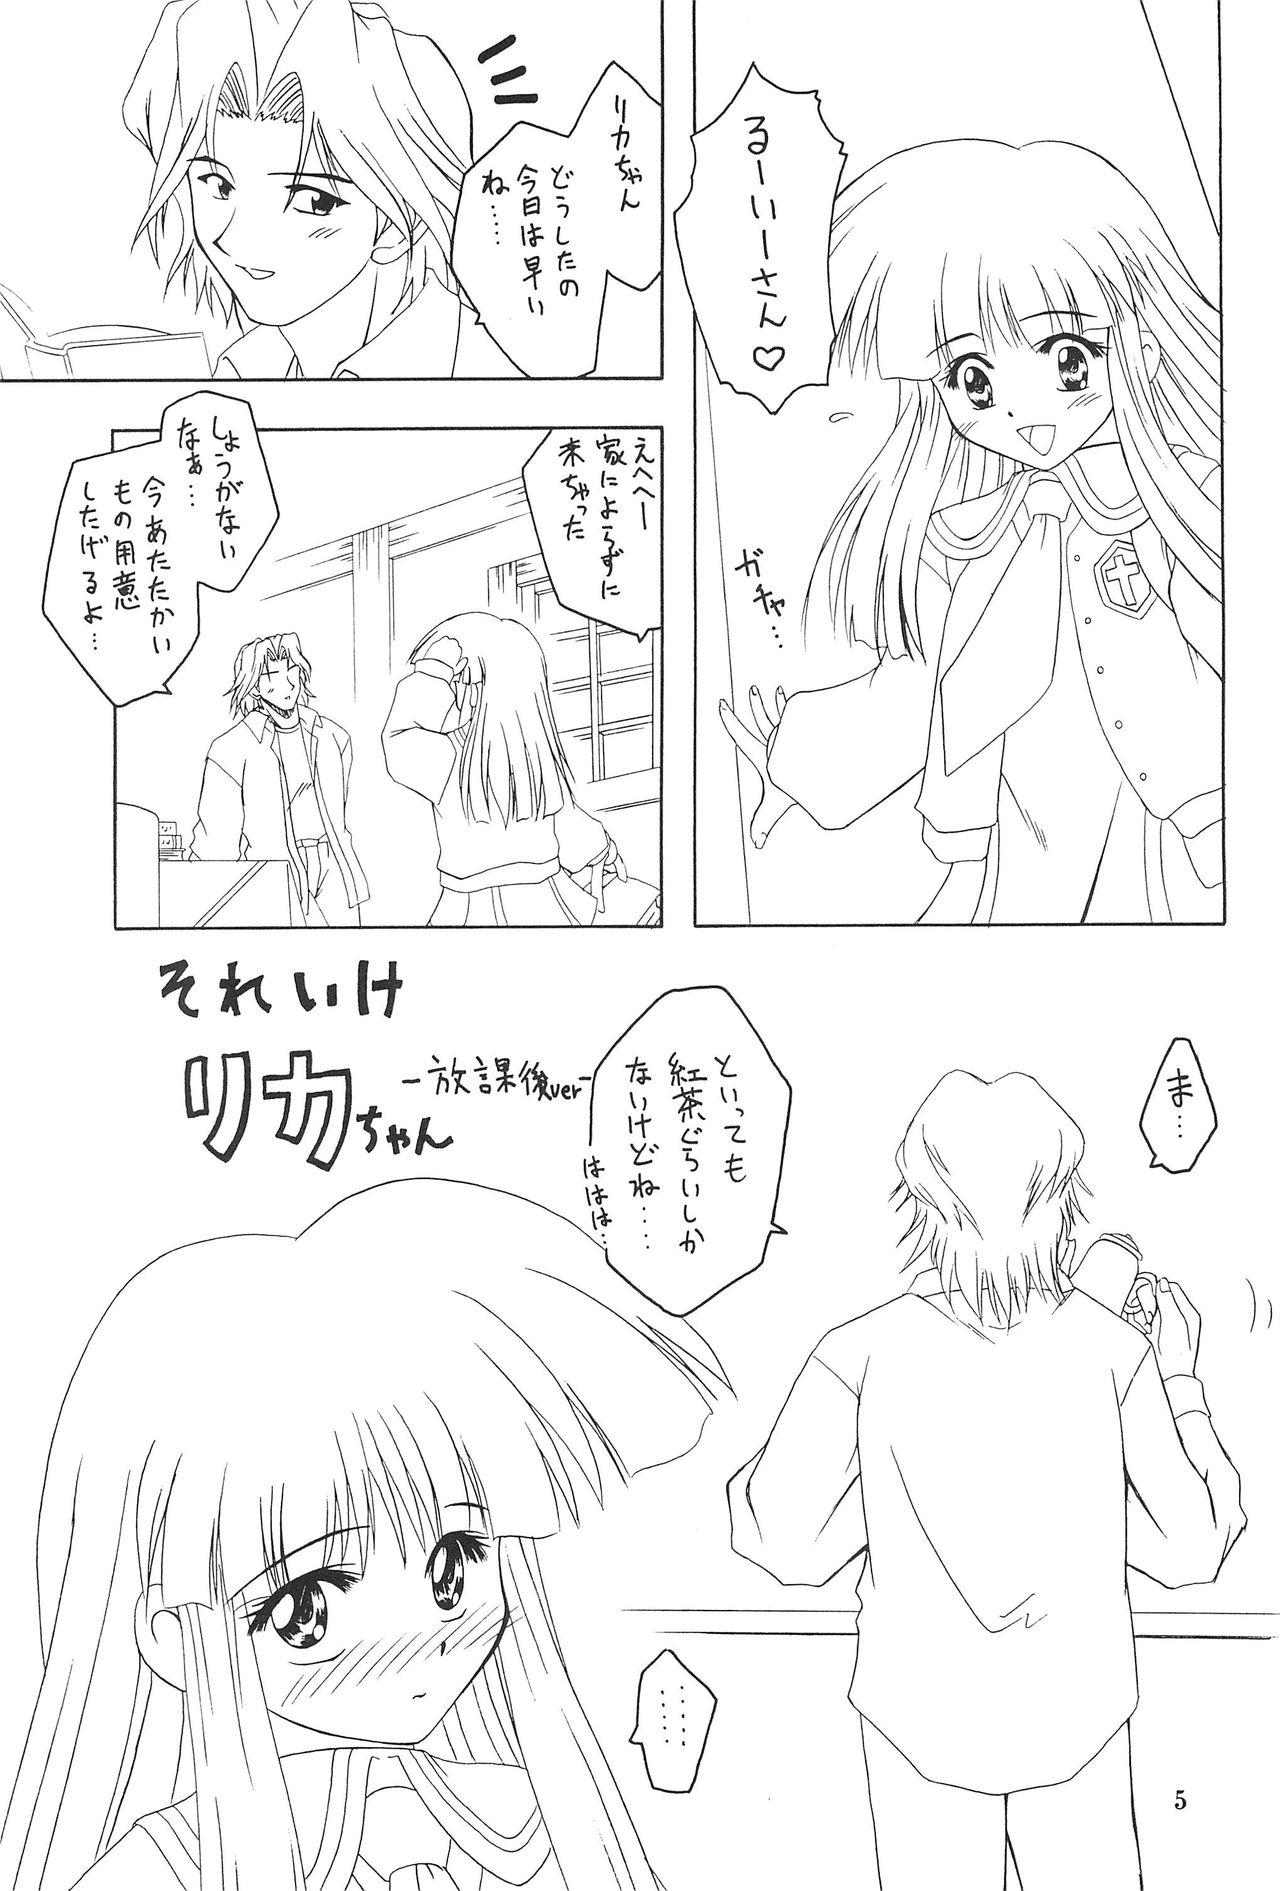 Sexcam Ne. - Super doll licca chan Furry - Page 5